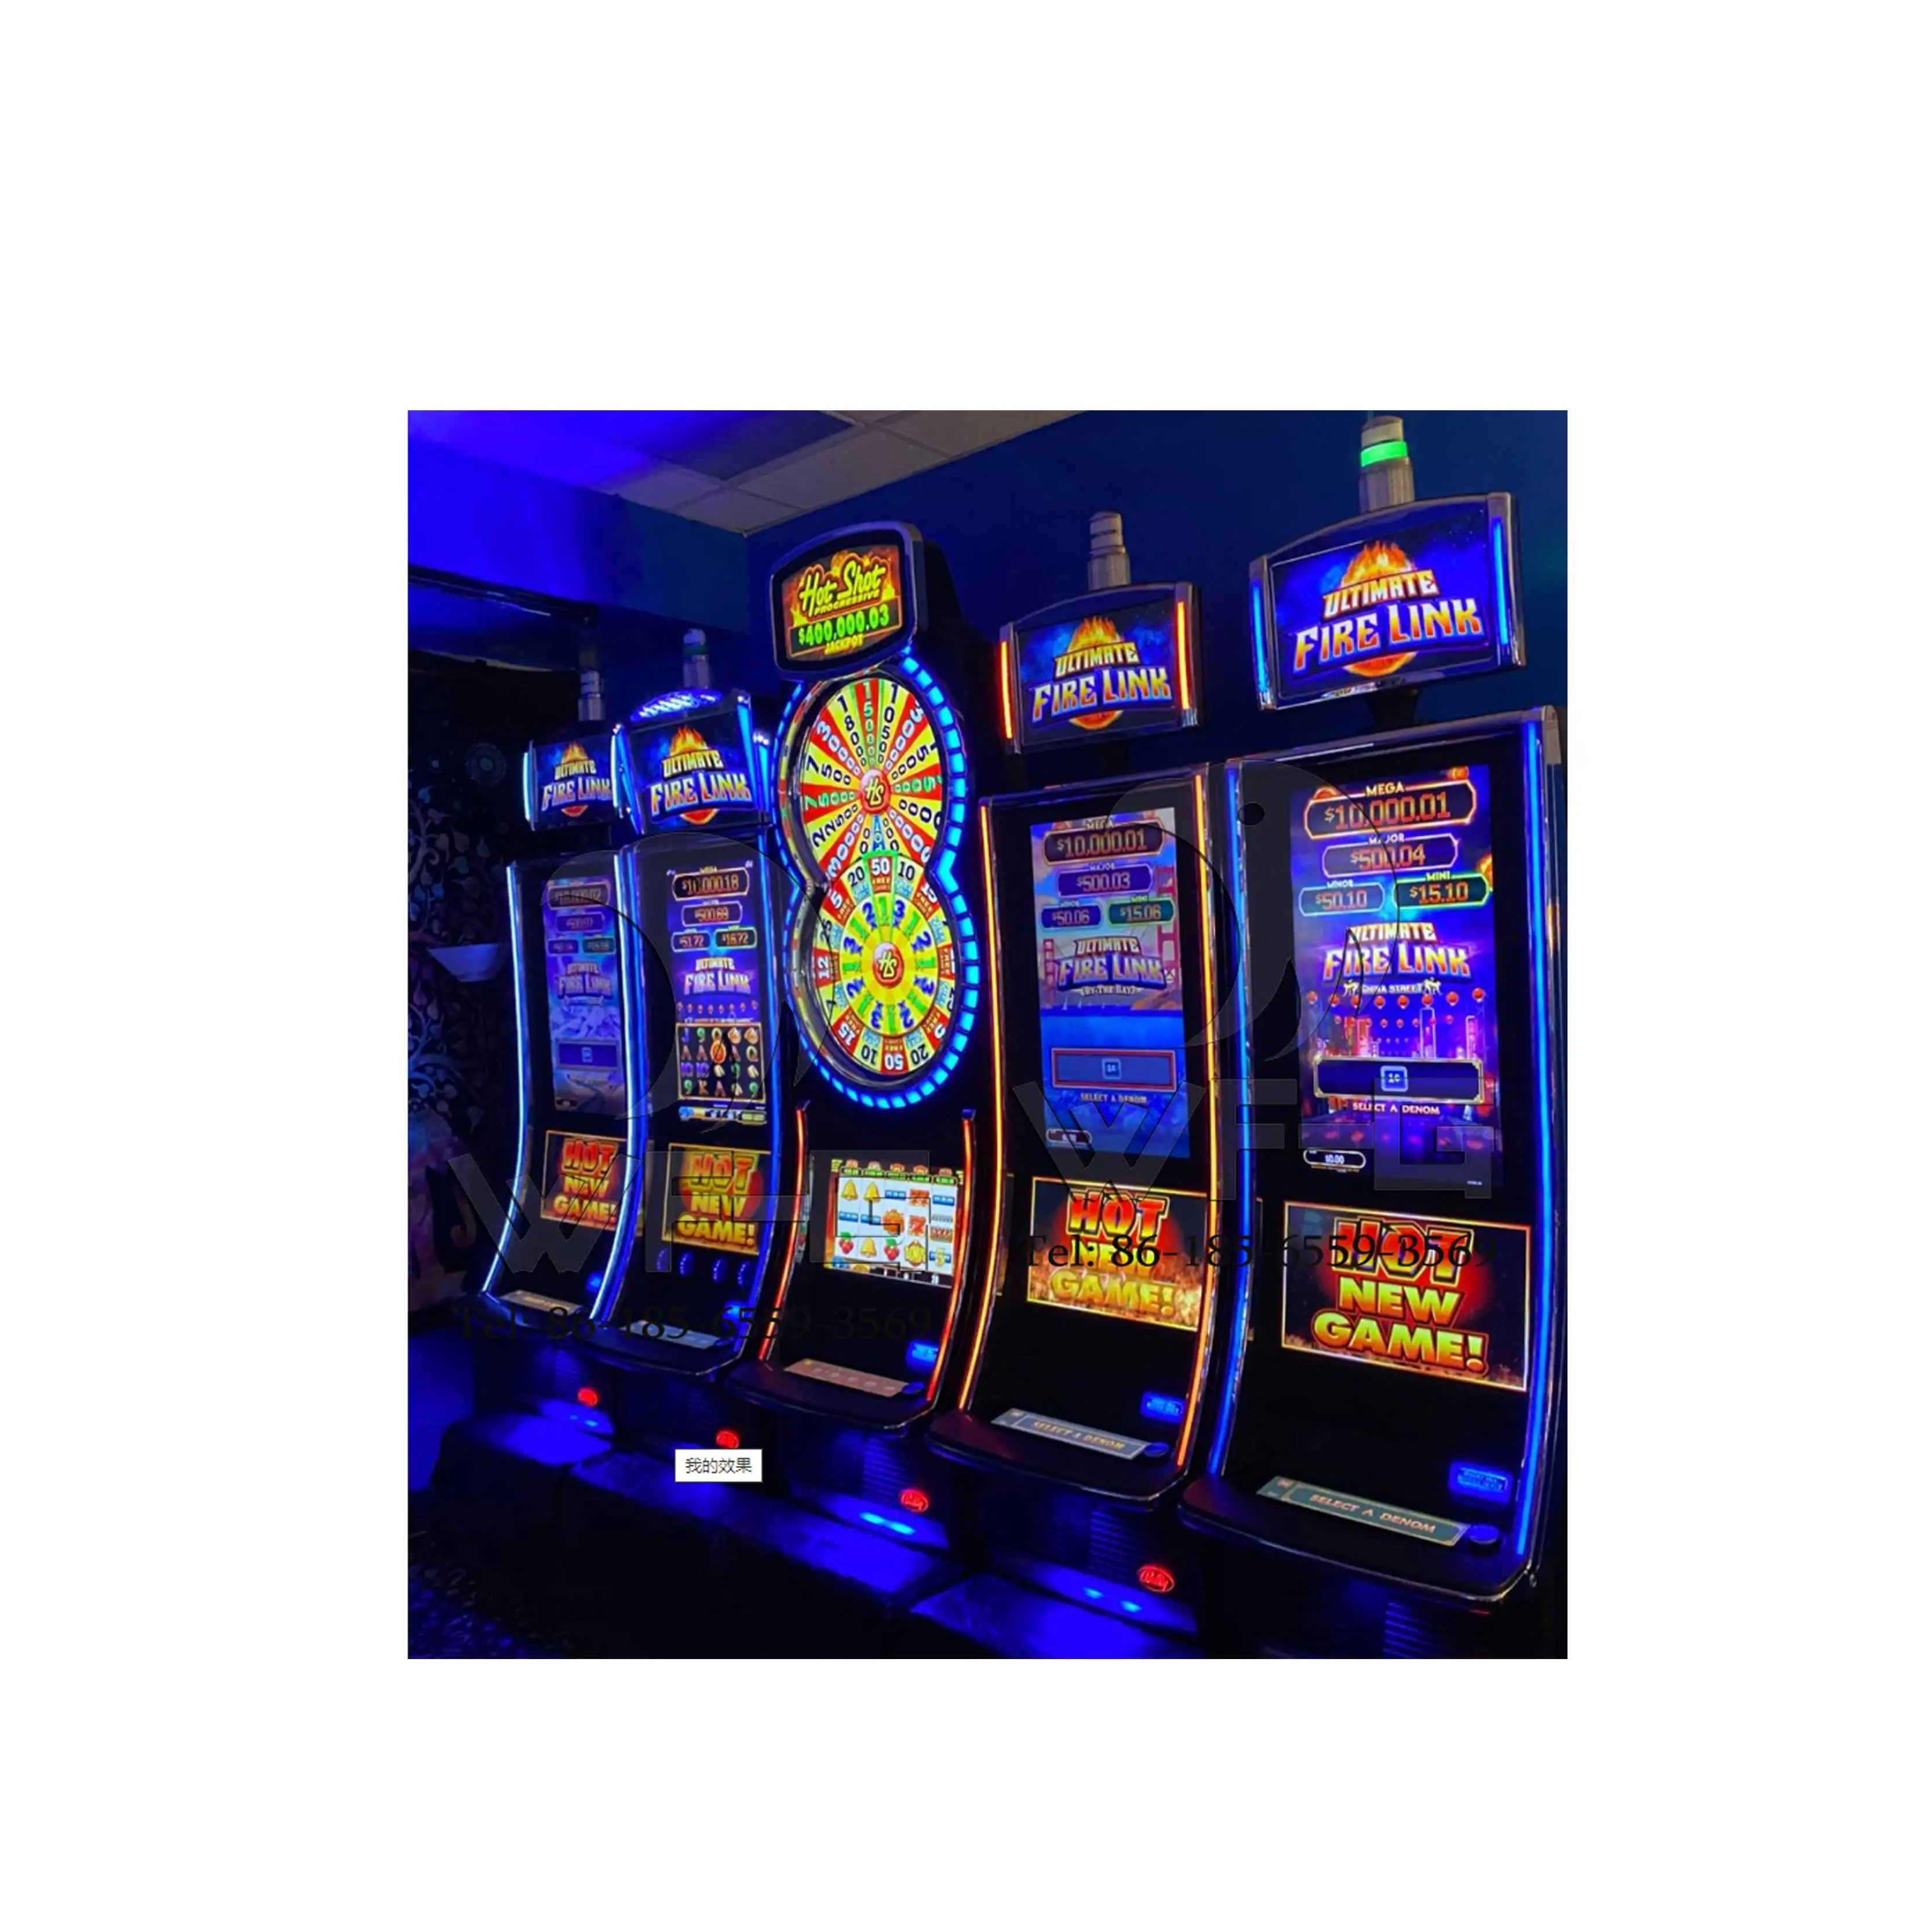 Royal ace casino 200 no deposit bonus codes 2019